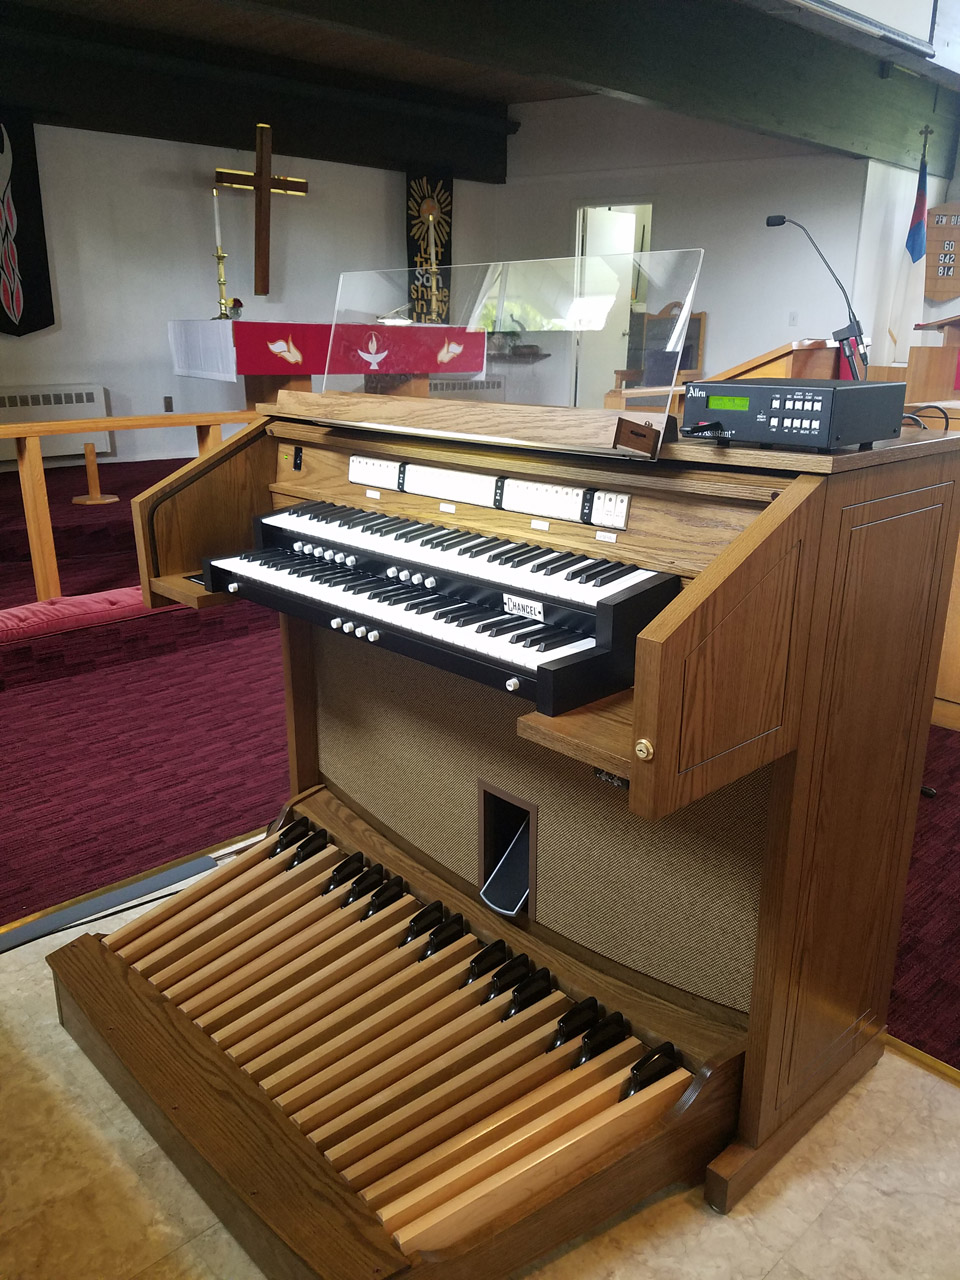 Allen CF-3 digital organ, Trinity Lutheran Church, Monroeville PA